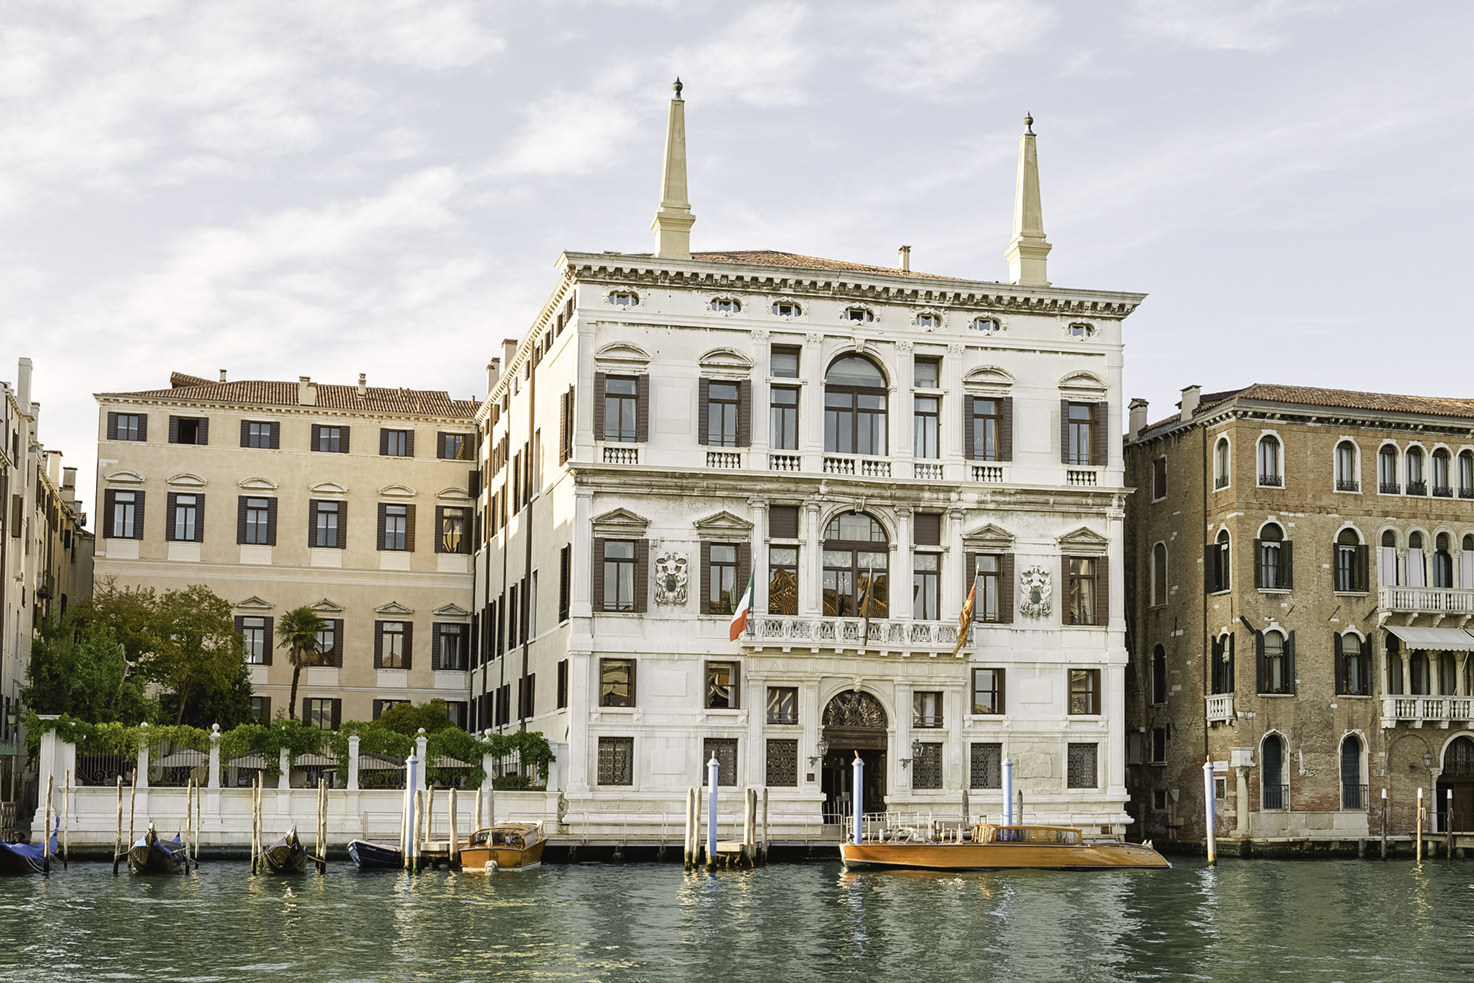 Aman Hotel, Grand Canal, Venice